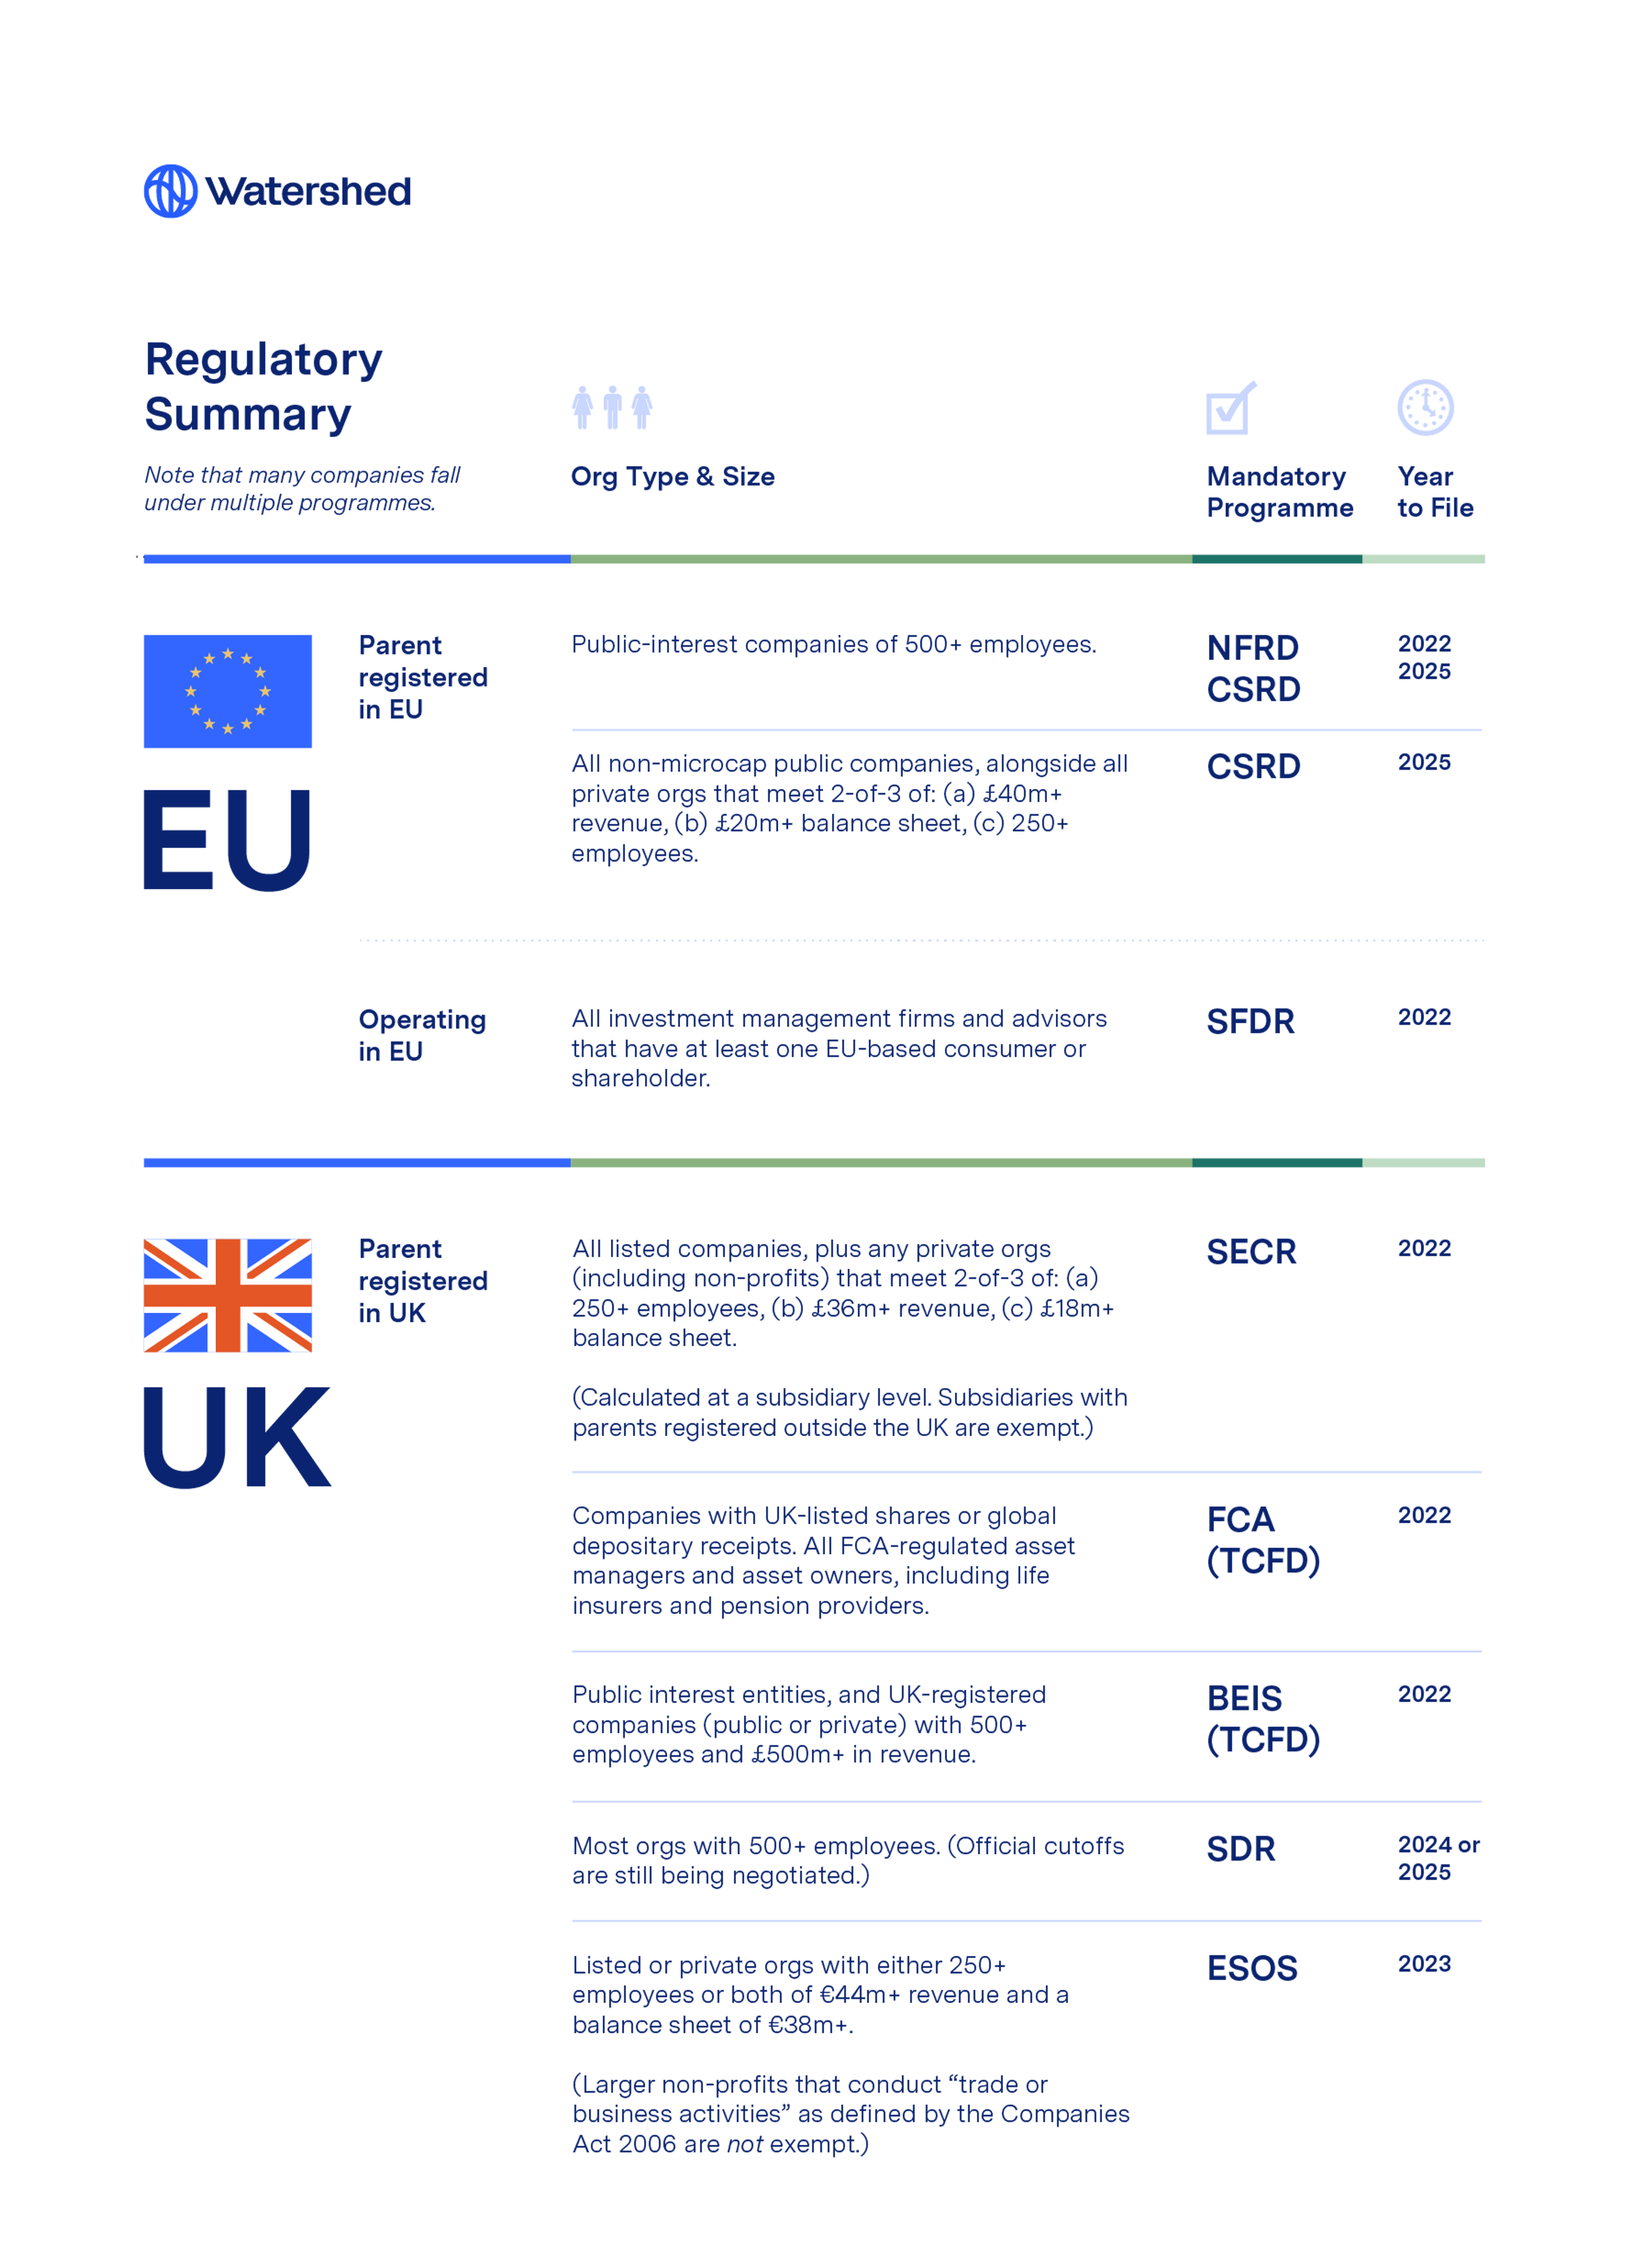 EU/UK Disclosures Regulatory Summary